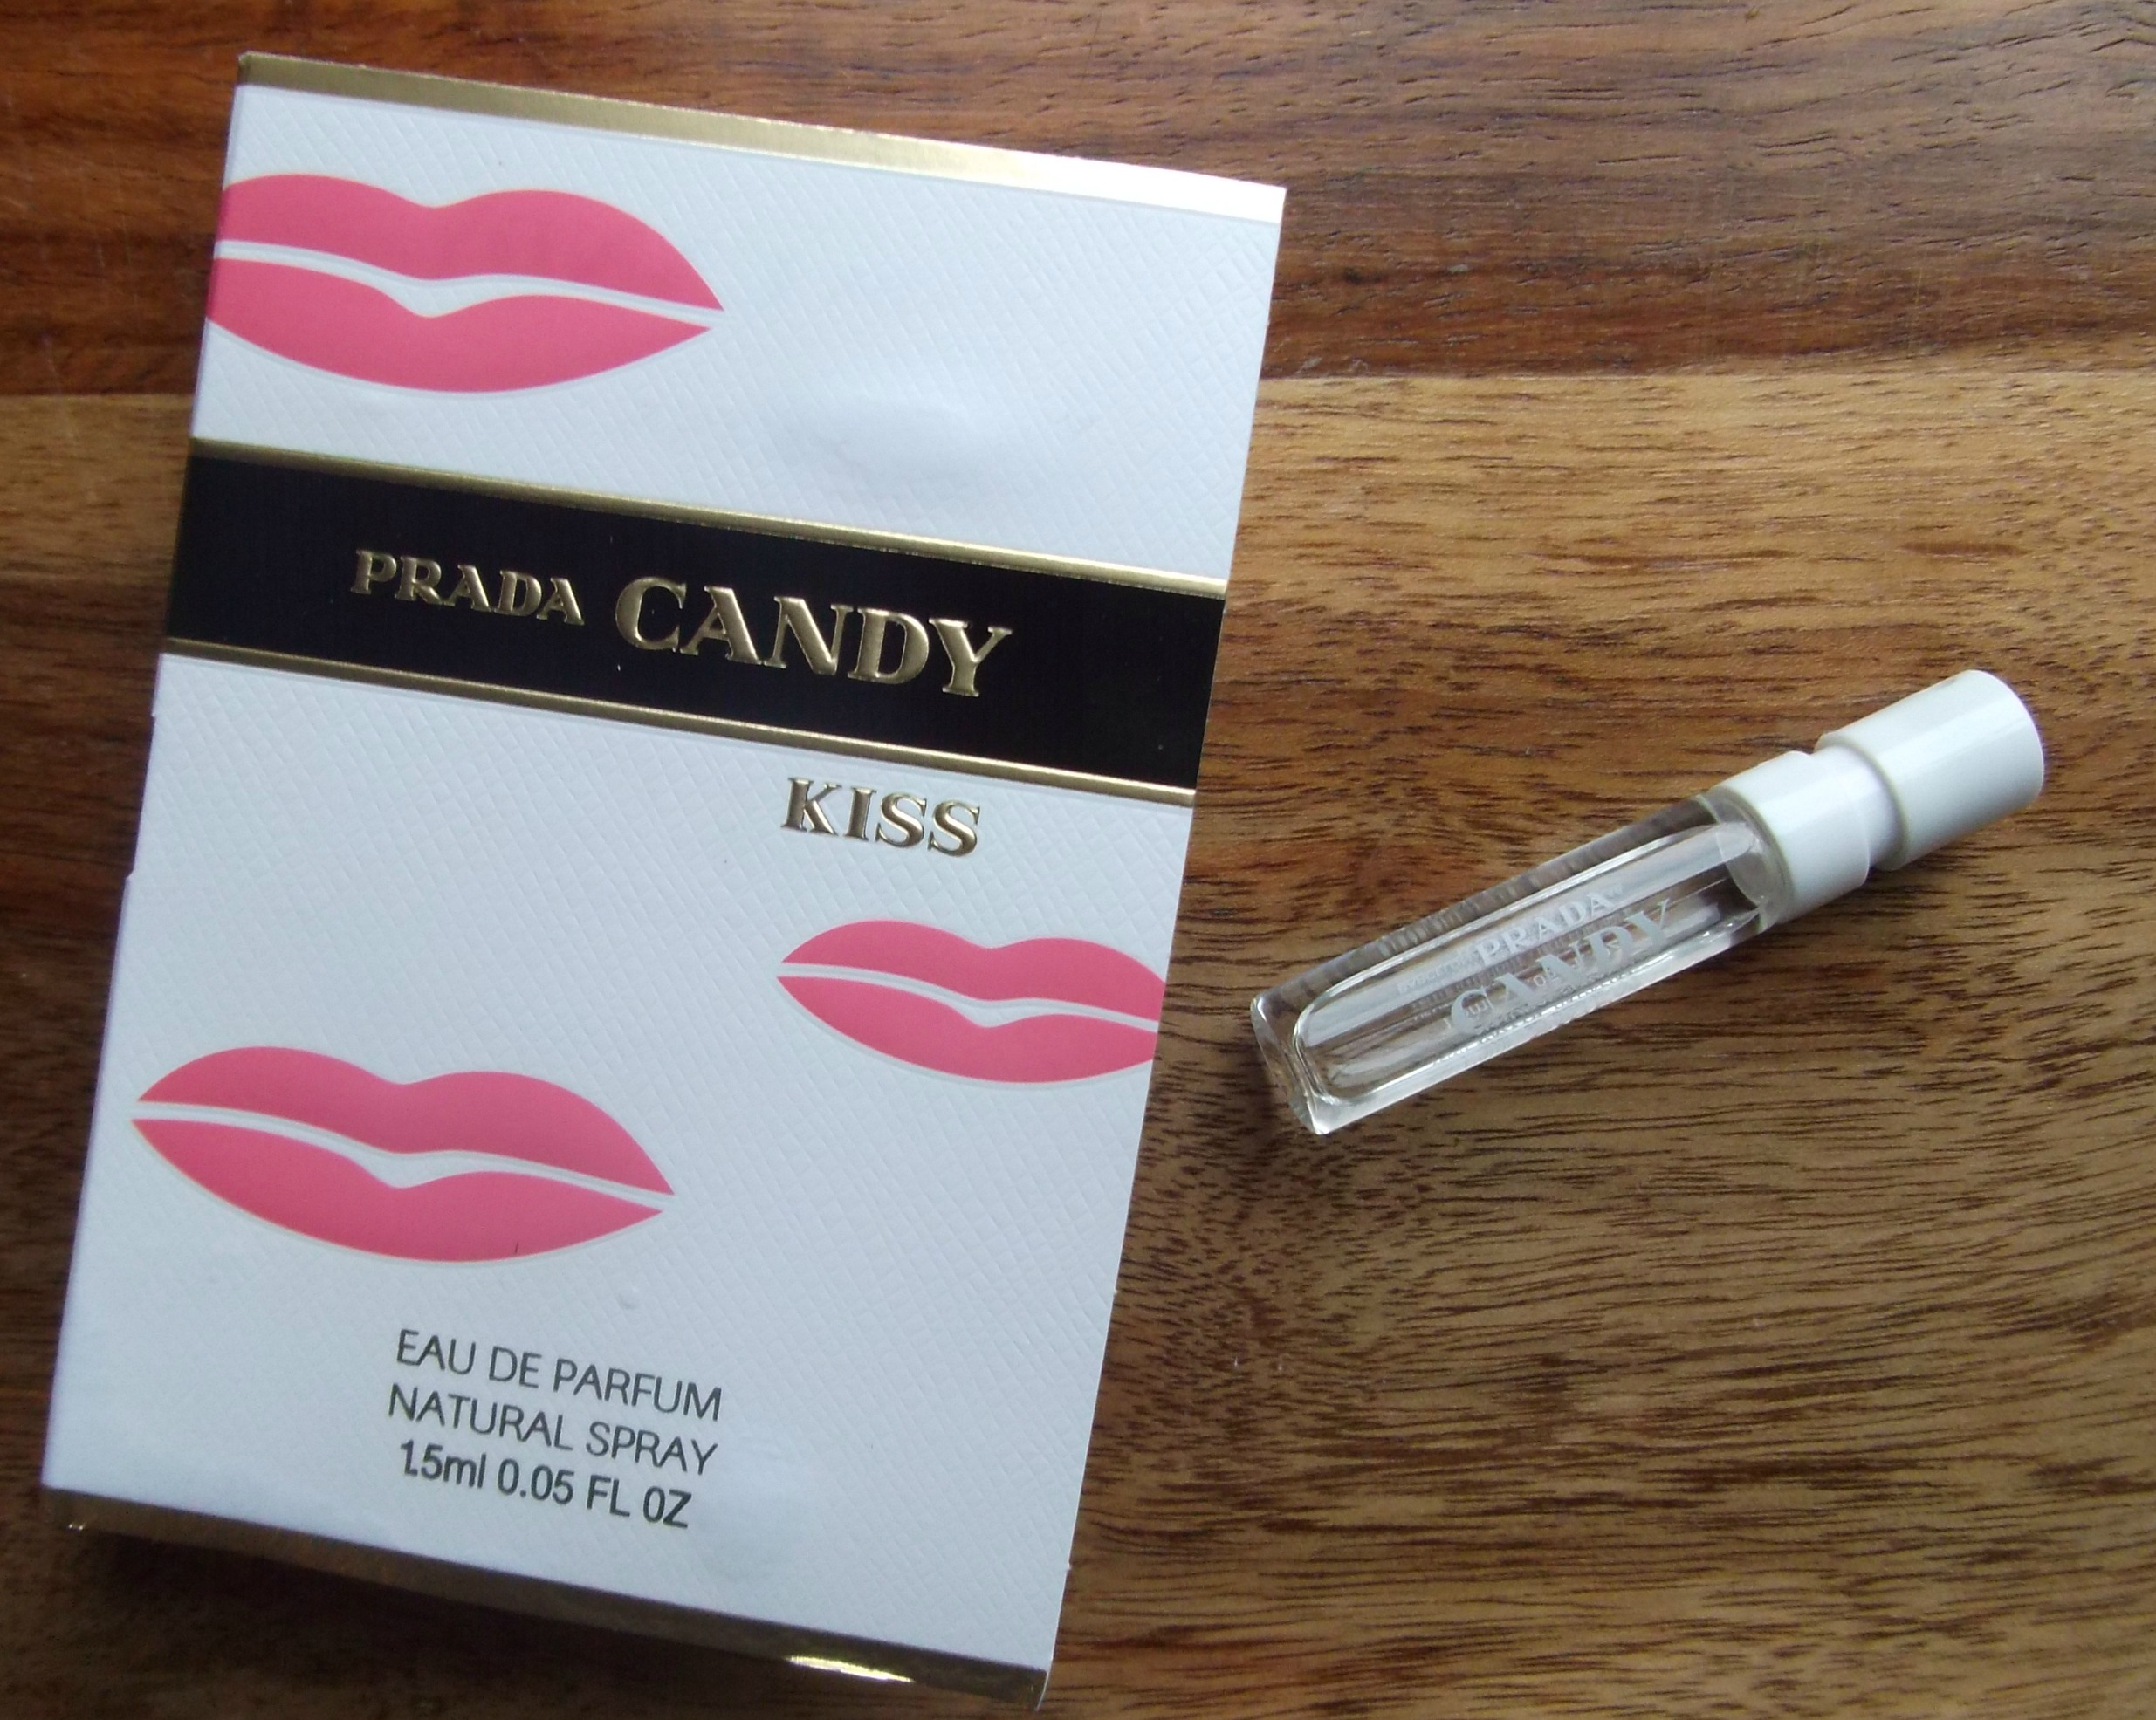 prada candy kiss sample